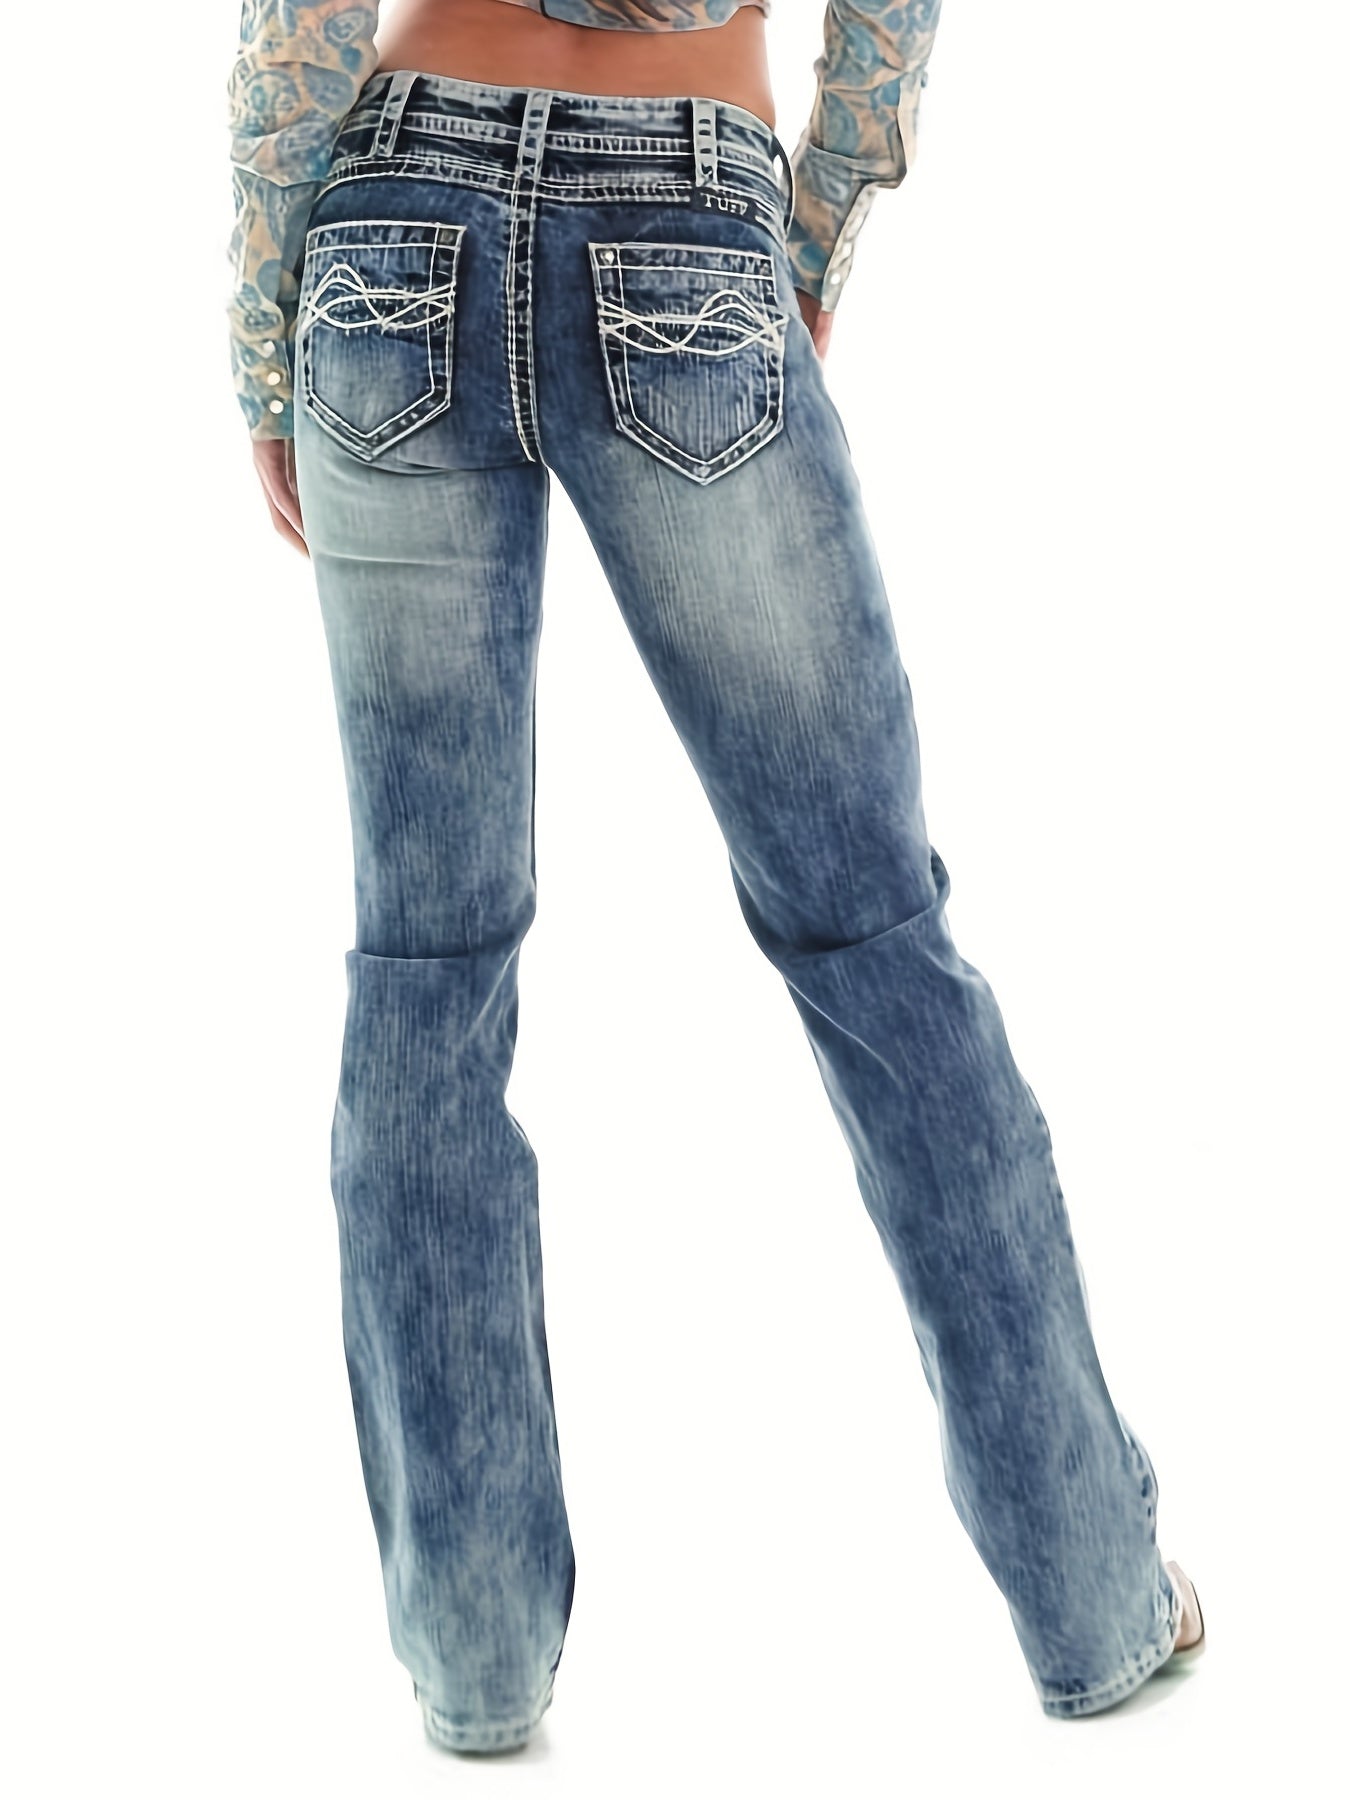 「lovevop」Ivory Top-stitching Mid Rise Boot Cut Jeans, Vintage Wash Zipper Button Closure Riding Denim Pants, Women's Denim Jeans & Clothing